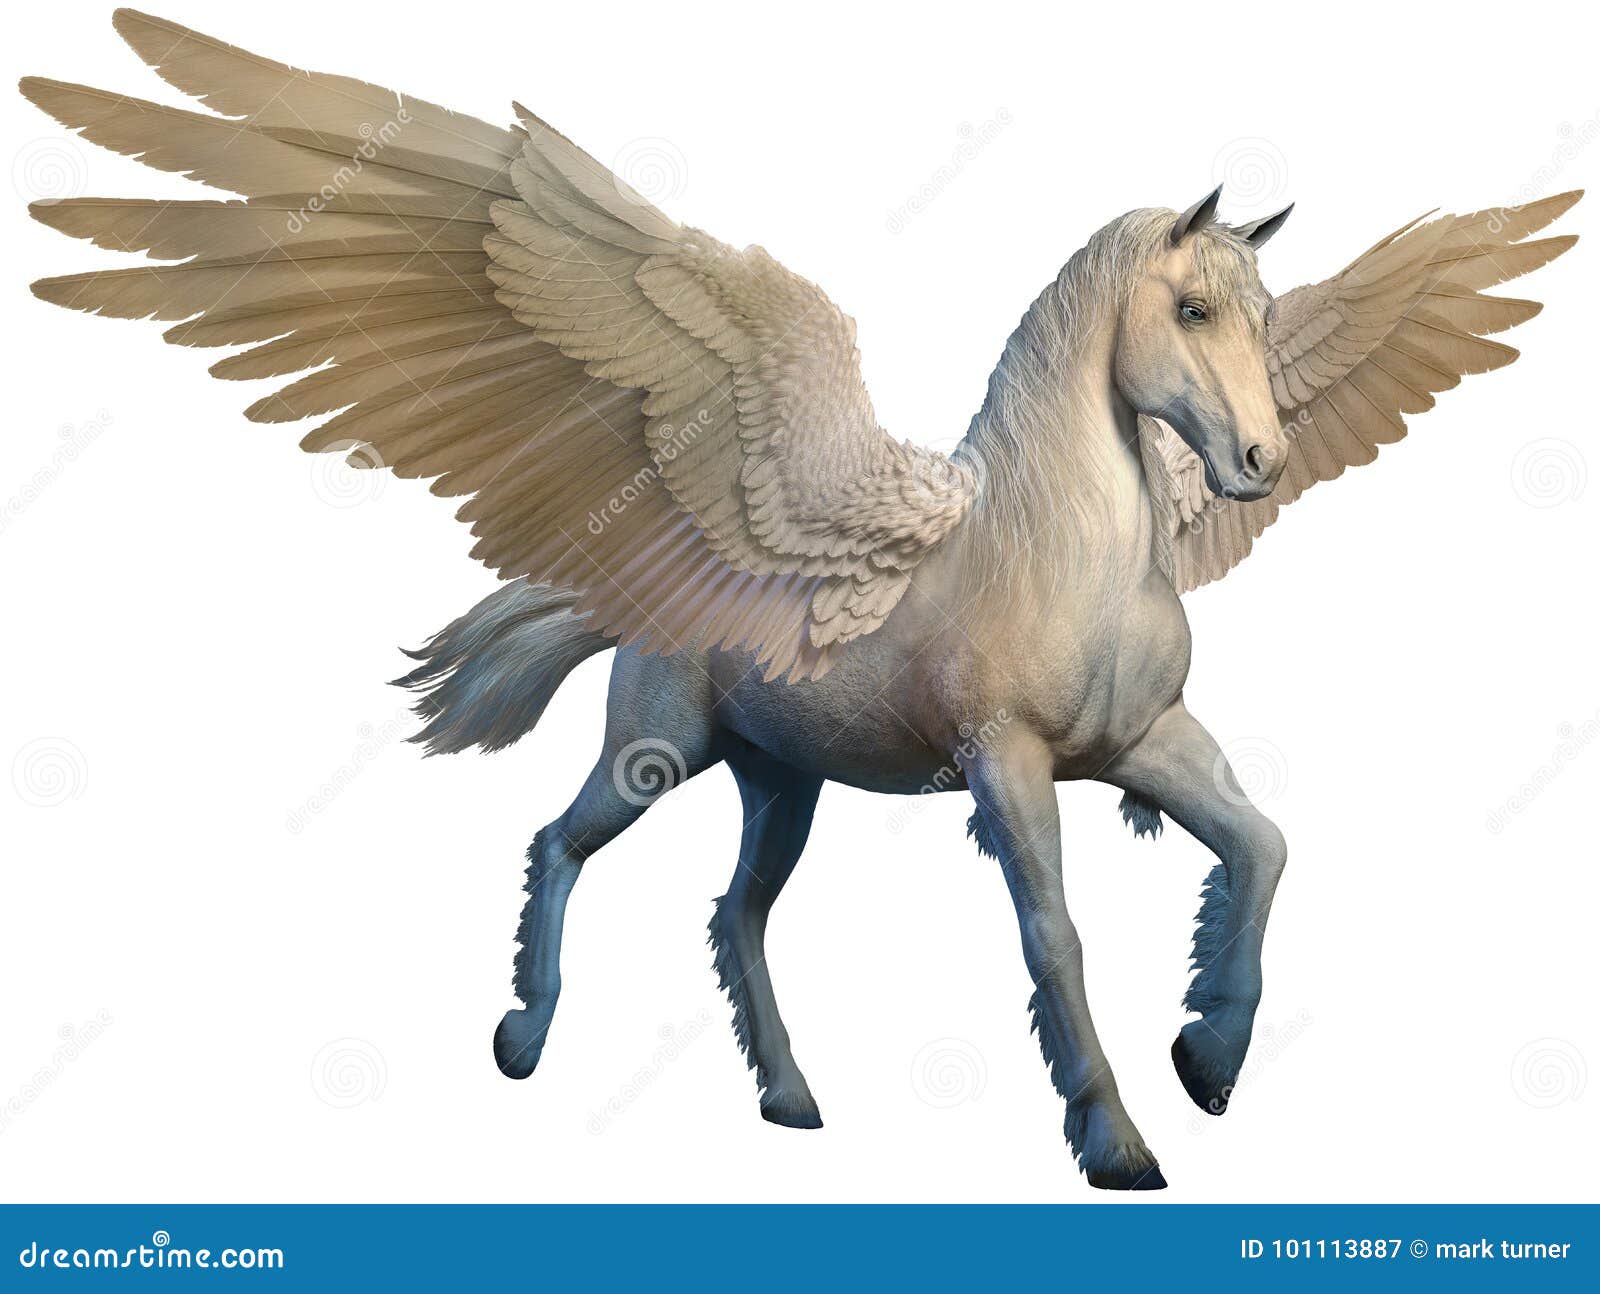 Pegasus 3d Illustration Stock Illustration Illustration Of Mythical